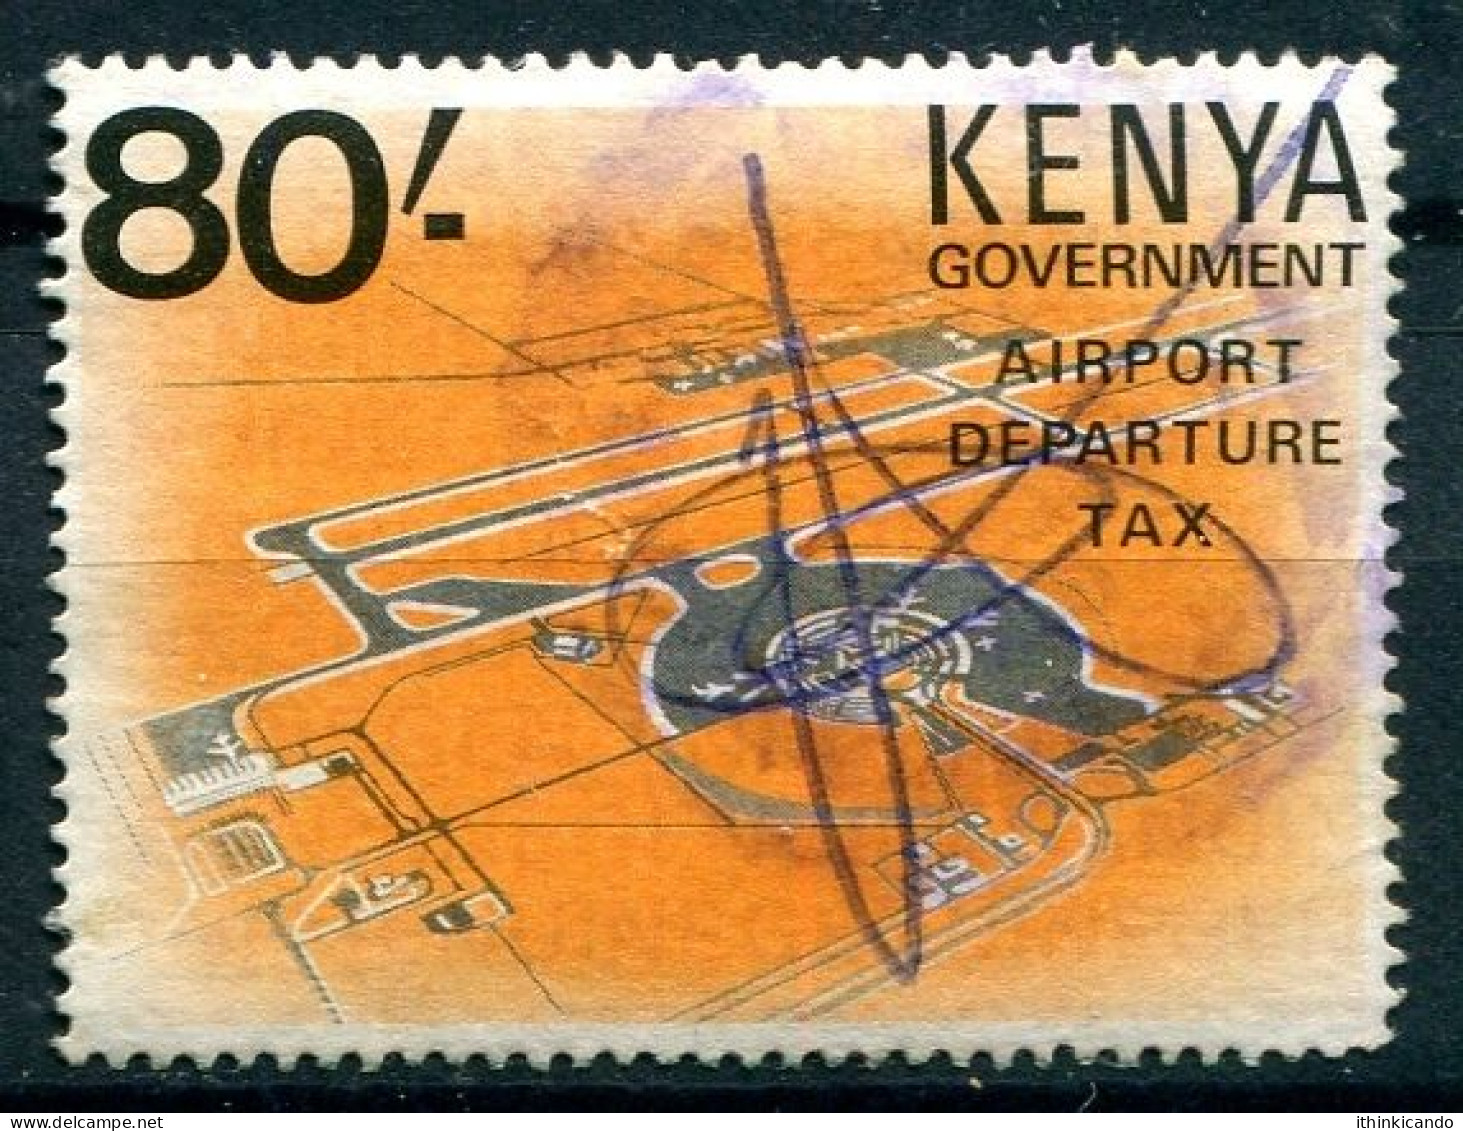 KENYA Airport Departure TAX Used - Kenya (1963-...)